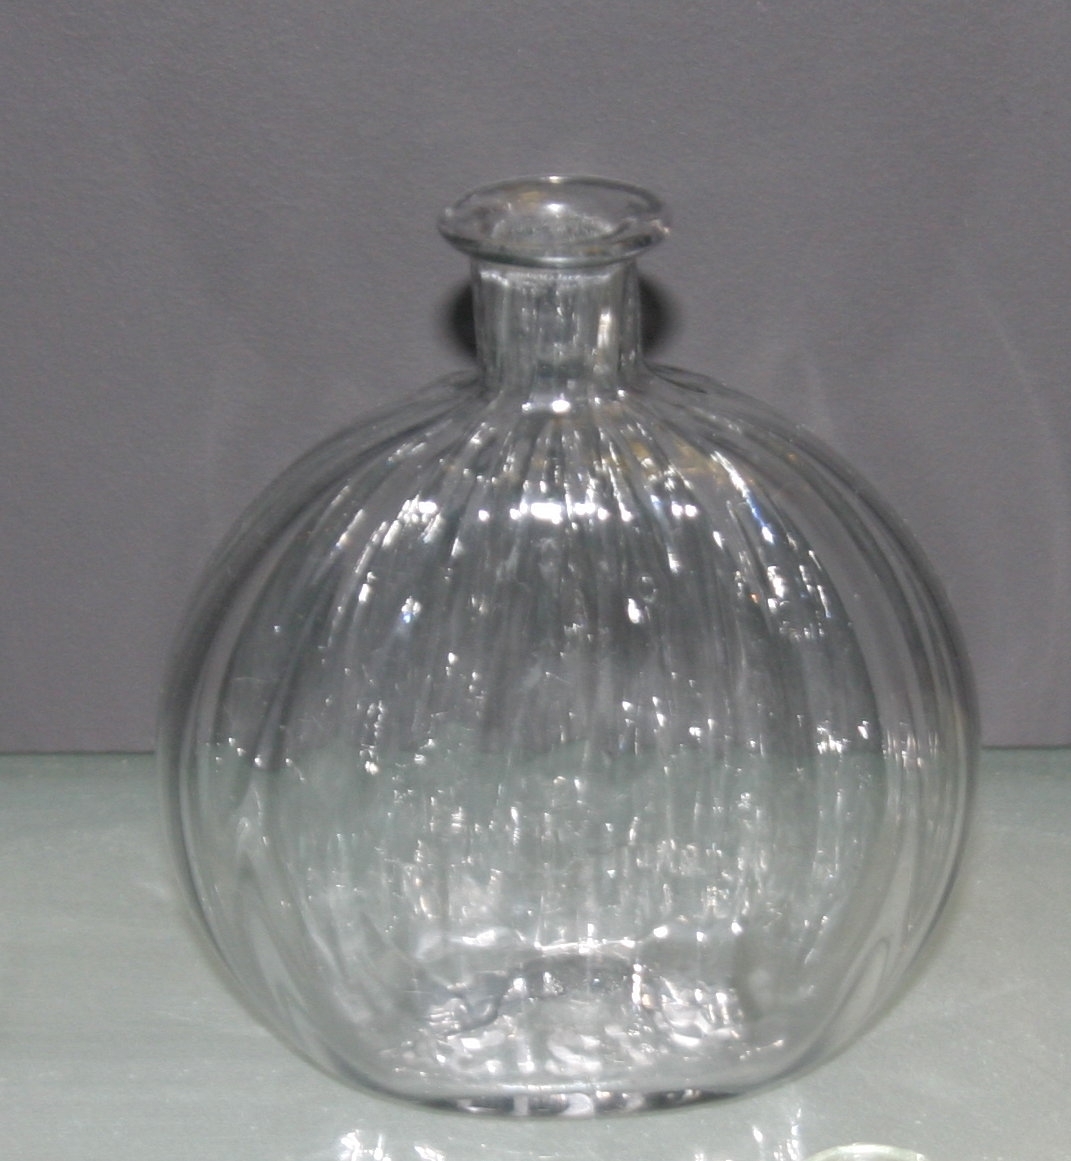 Liten, rund, flattrykt flaske i glass med vertikale striper preget i glasset.